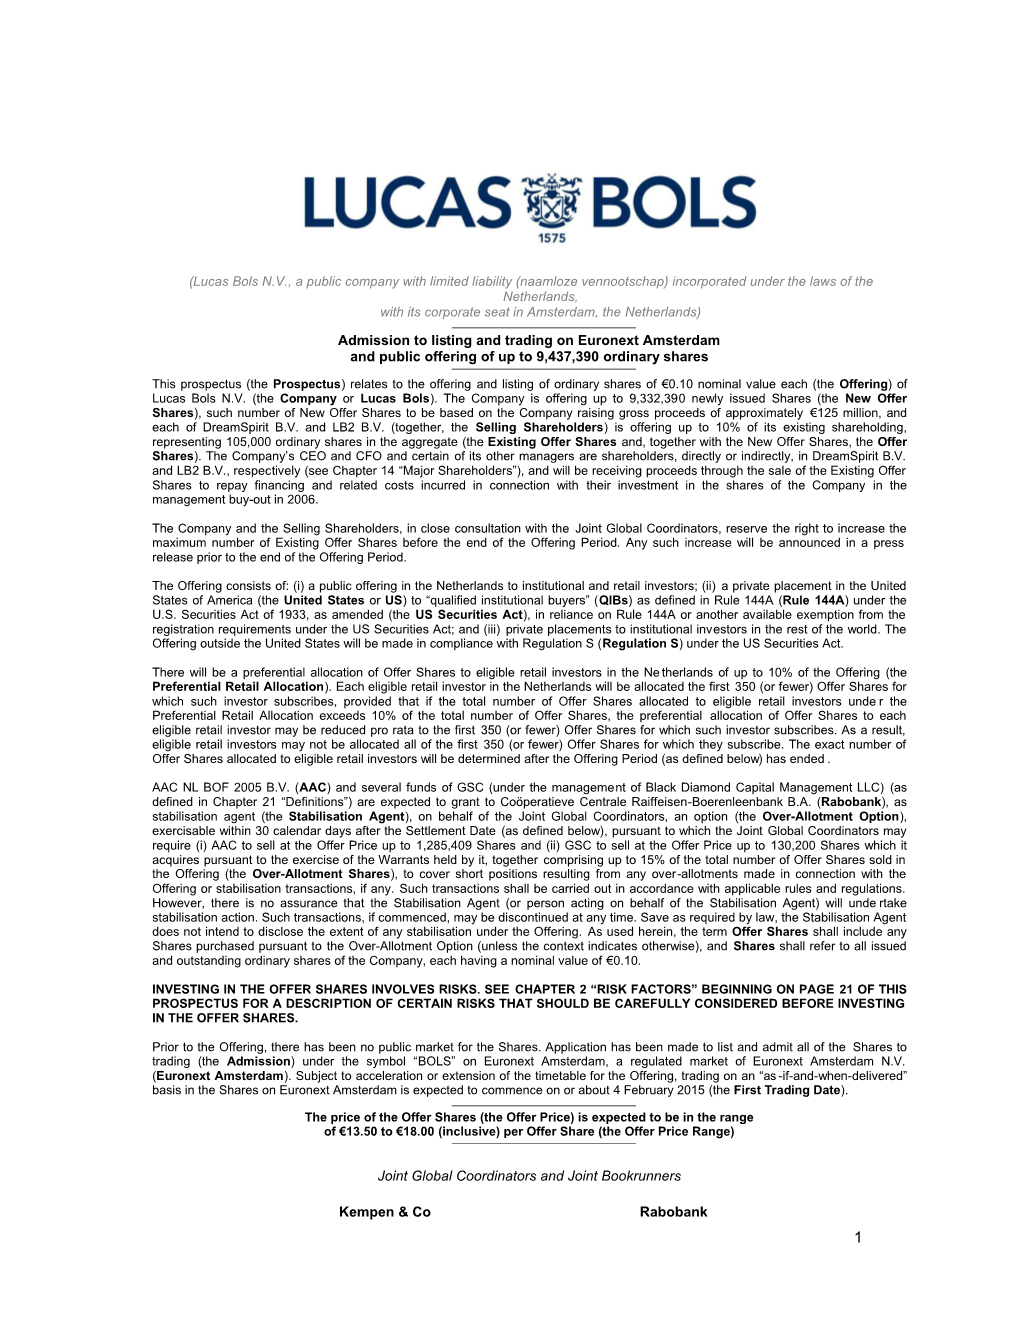 (Lucas Bols N.V., a Public Company with Limited Liability (Naamloze